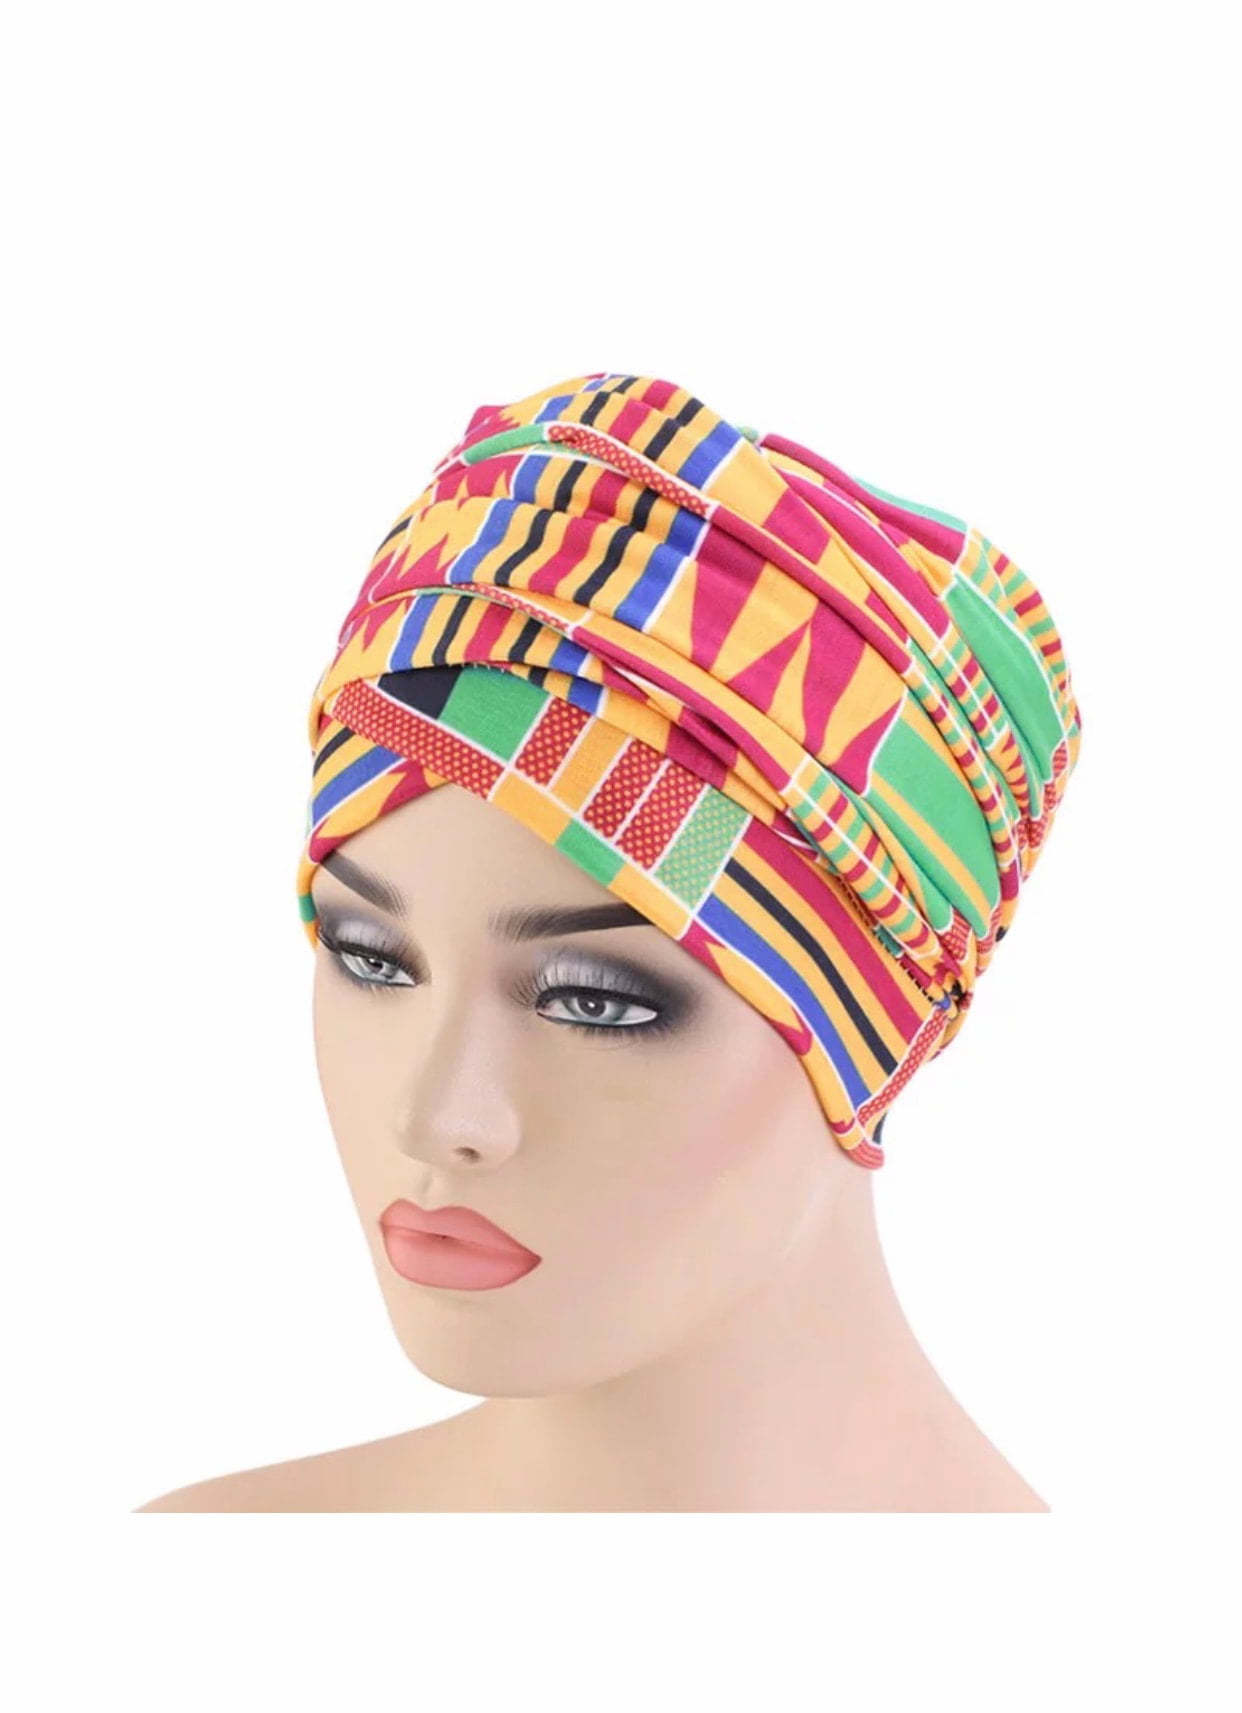 Turban Head Wrap Scarf,African Long Scarf Turban Shawl Hair Bohemian Headwrap 